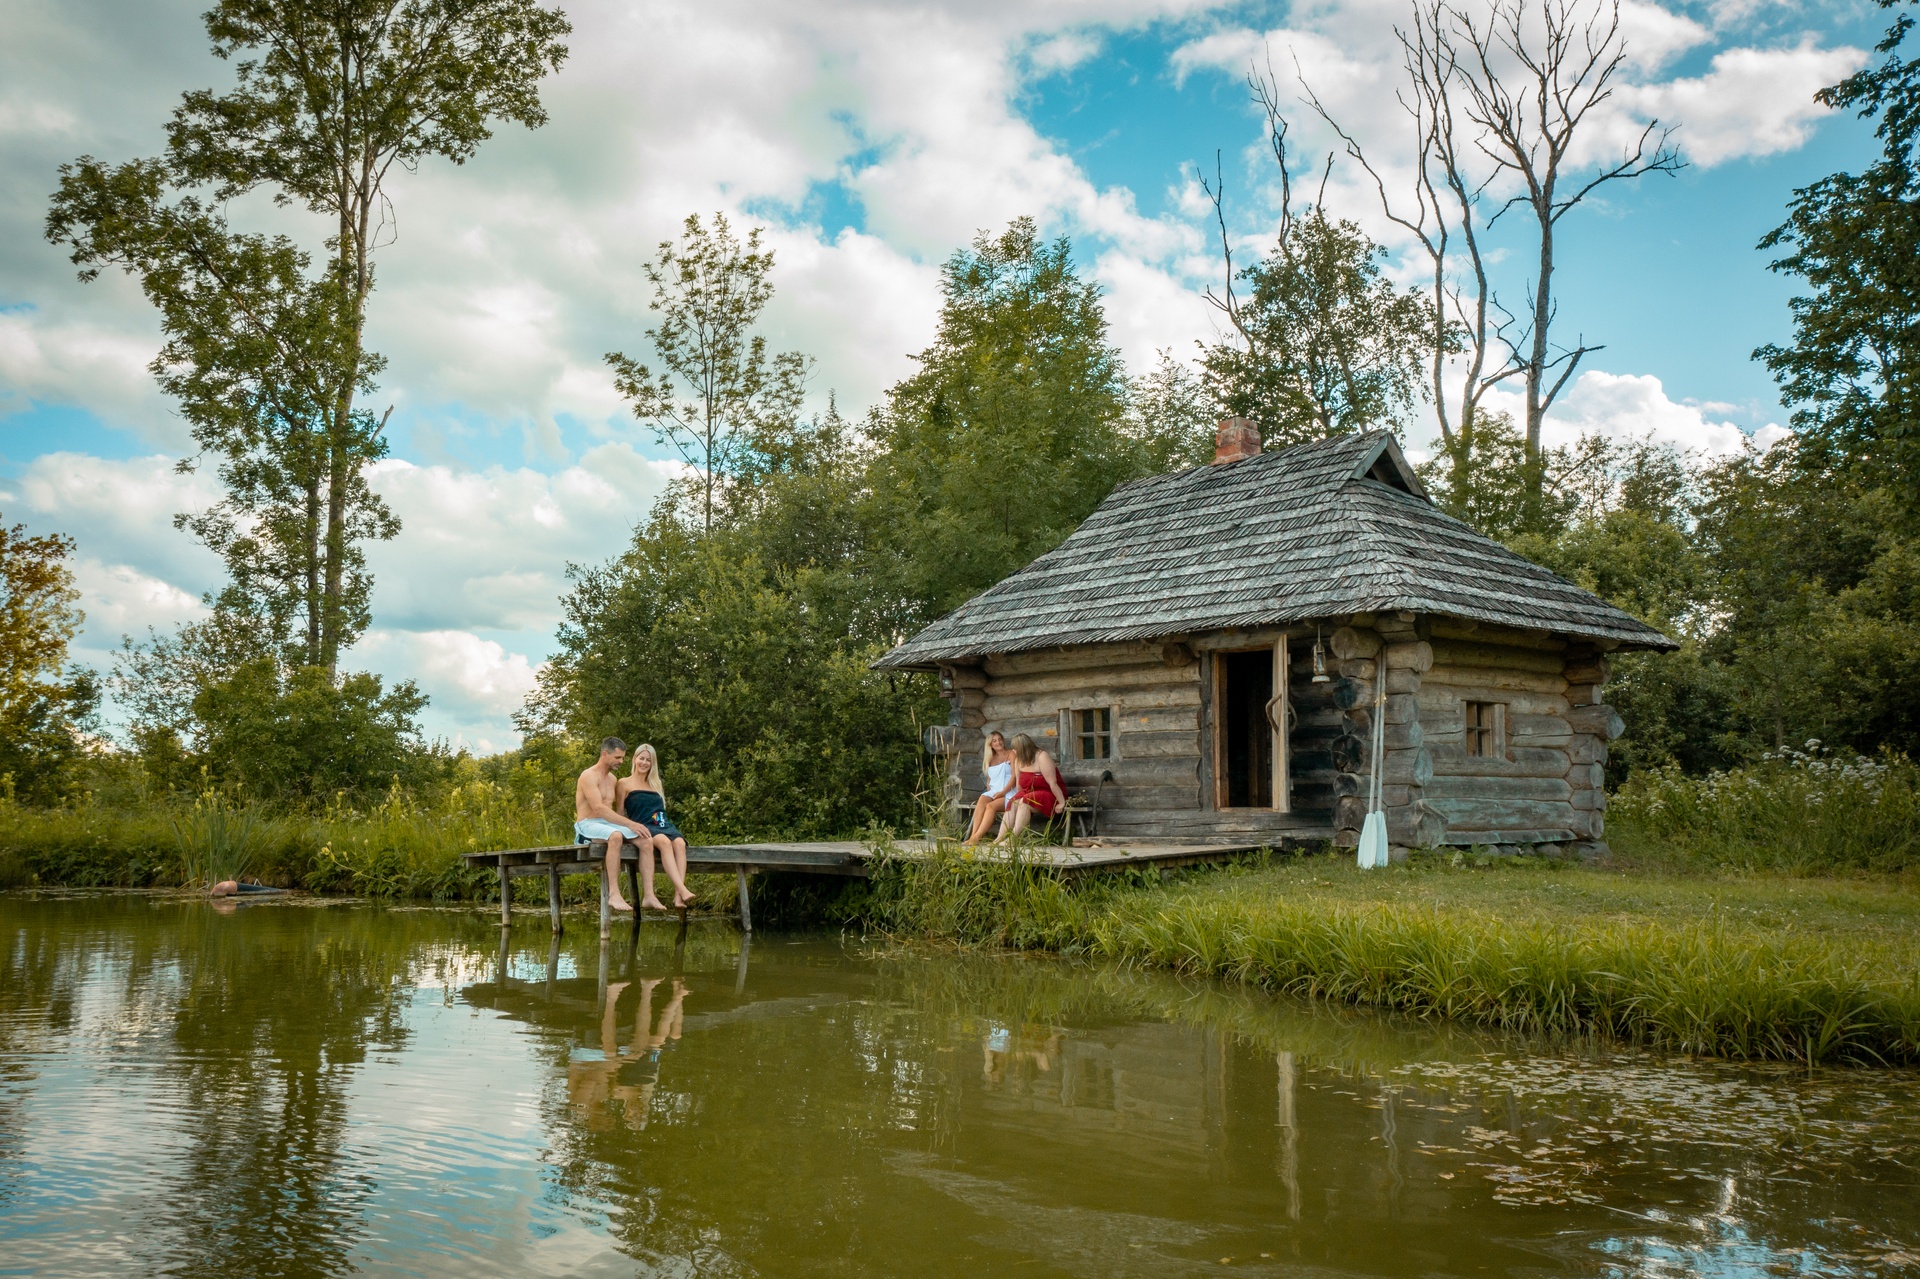 Torupillitalu Holiday House sauna in Estonia during summer